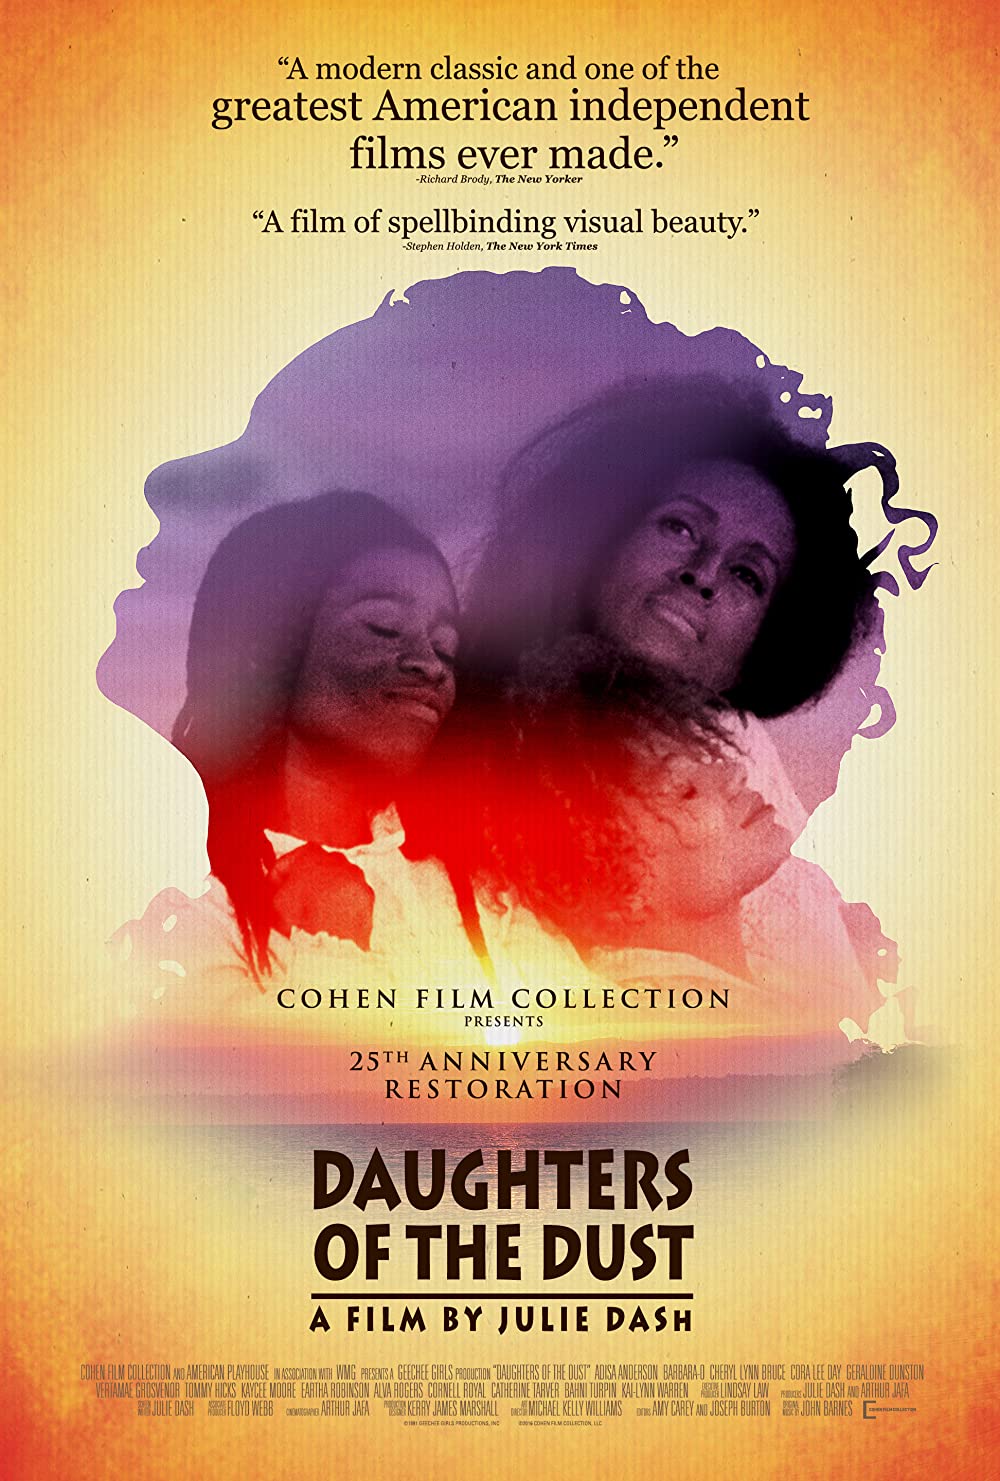 Filmbeschreibung zu Daughters of the Dust